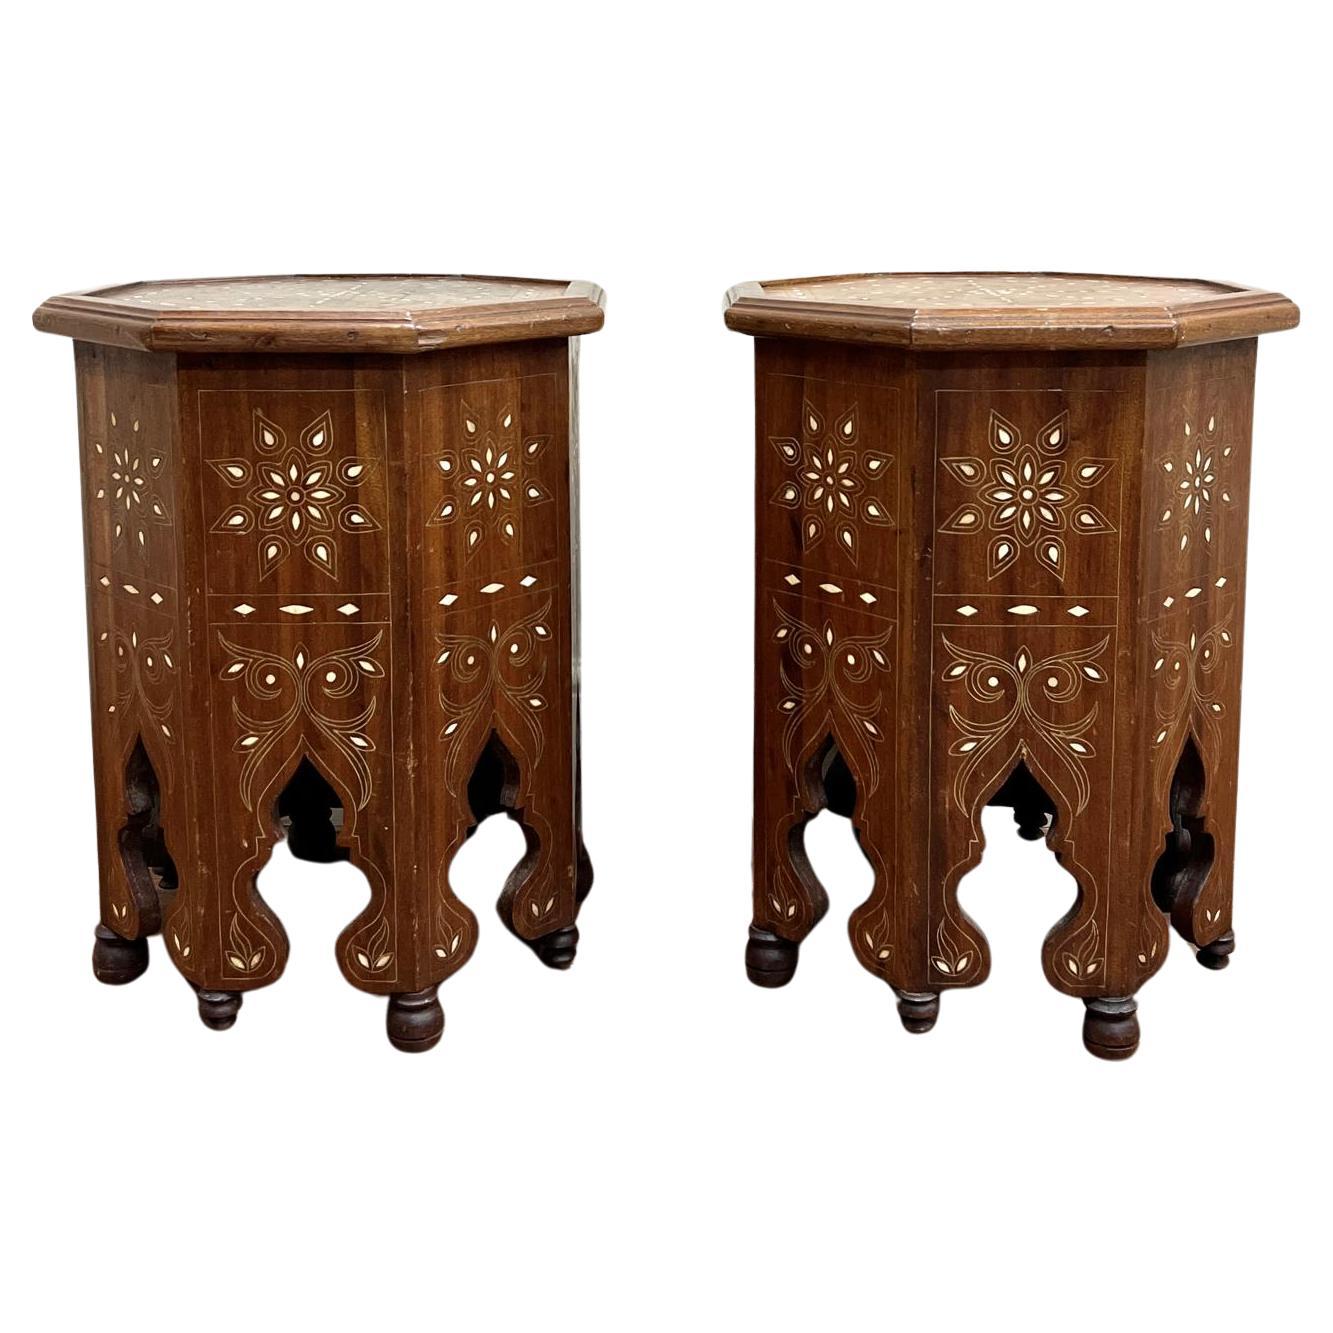 Pair of Moorish Inlaid Tables